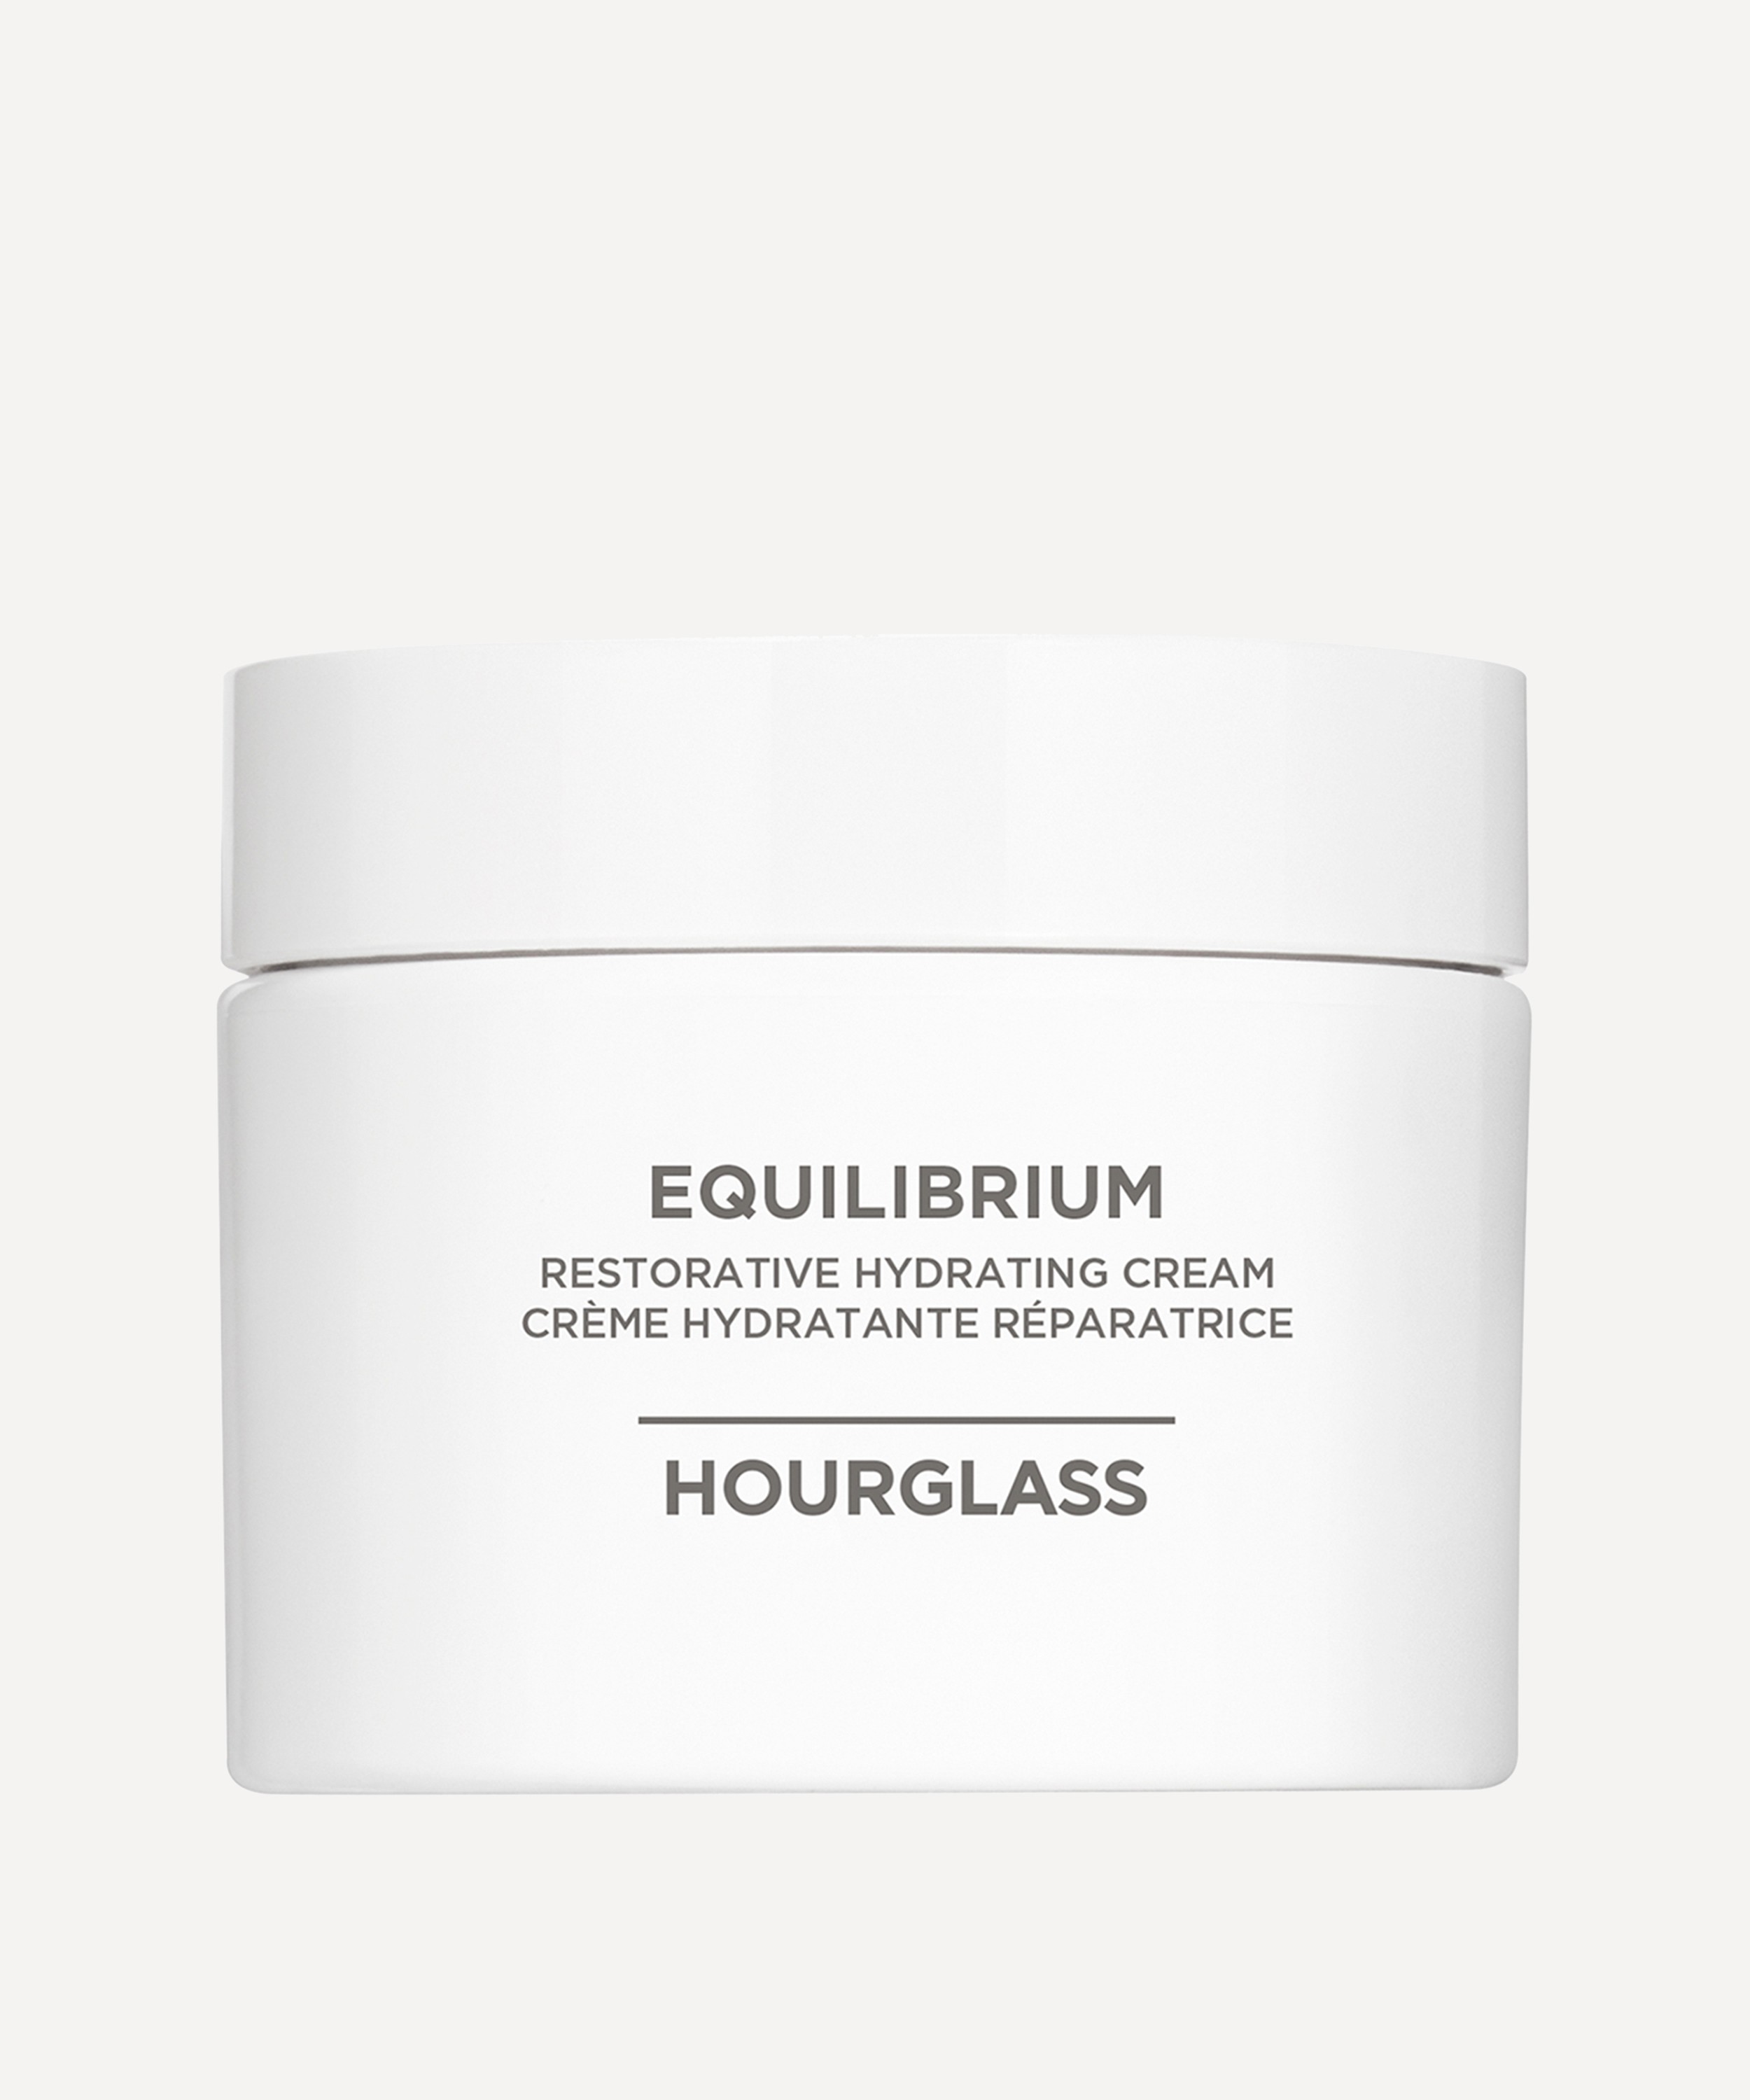 Hourglass - Equilibrium Restorative Hydrating Cream 53.8g image number 0